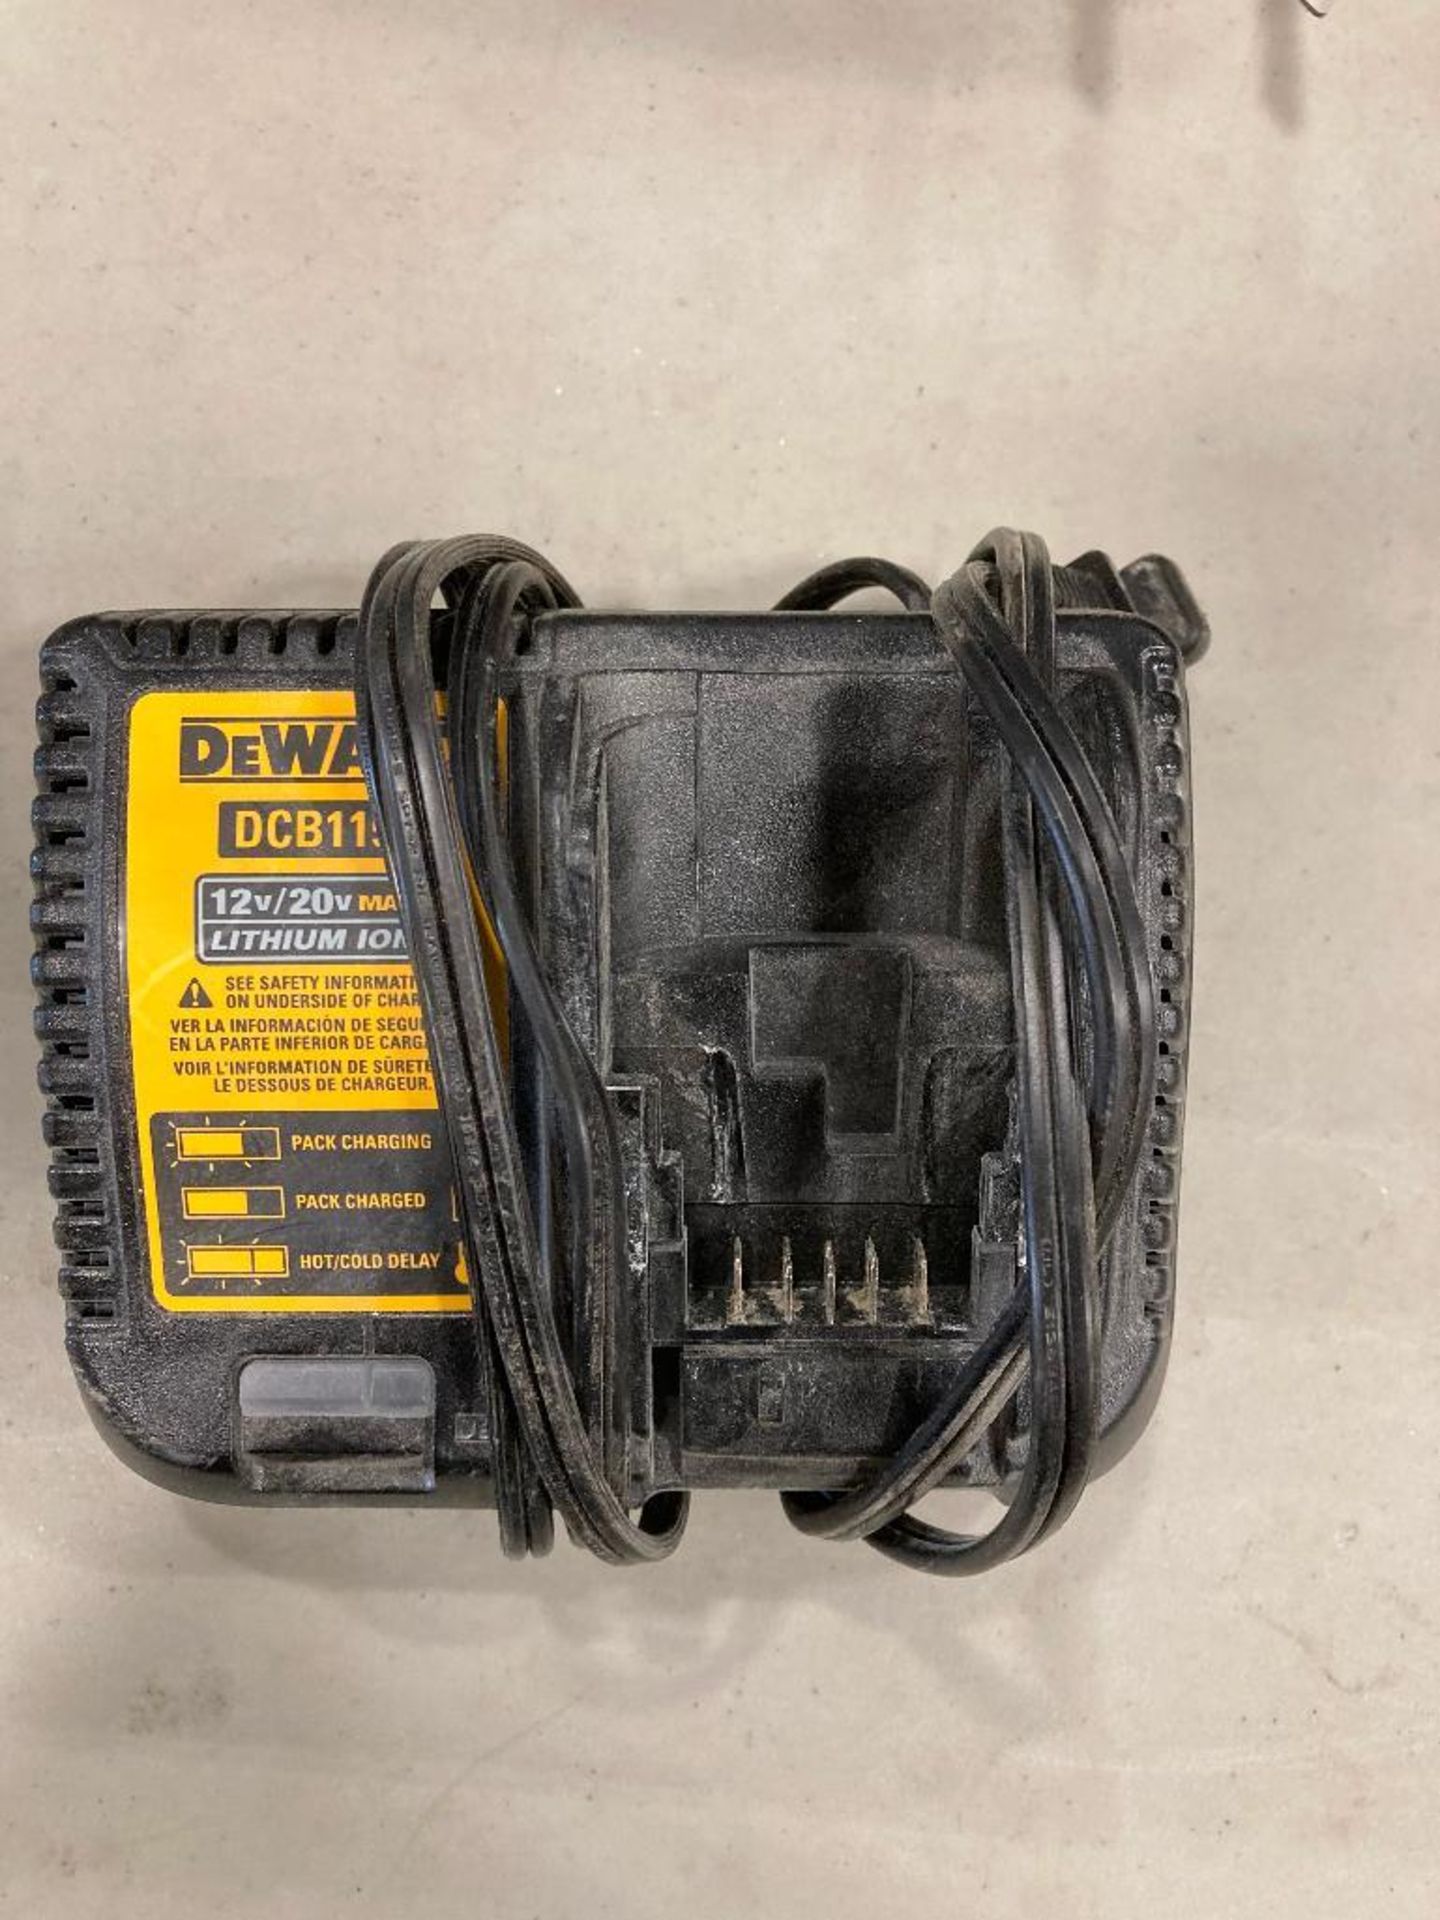 DeWalt DCS331 Jig Saw & Battery Charger - Image 5 of 6